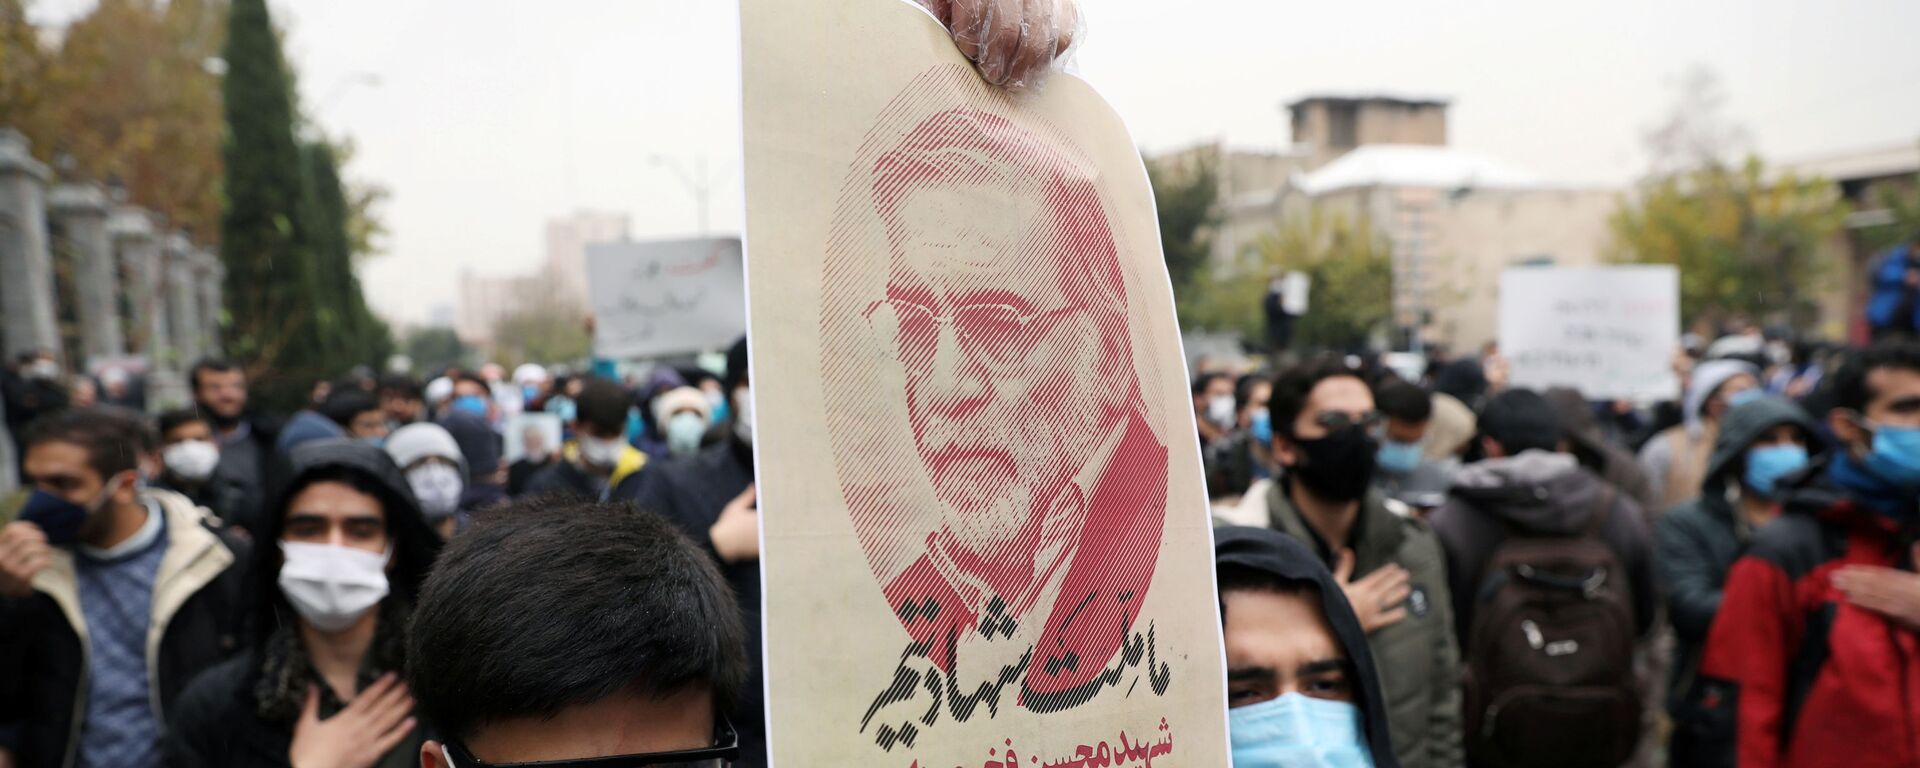 Anger in Iran over killing of Iran's top nuclear scientist - Sputnik International, 1920, 18.09.2021